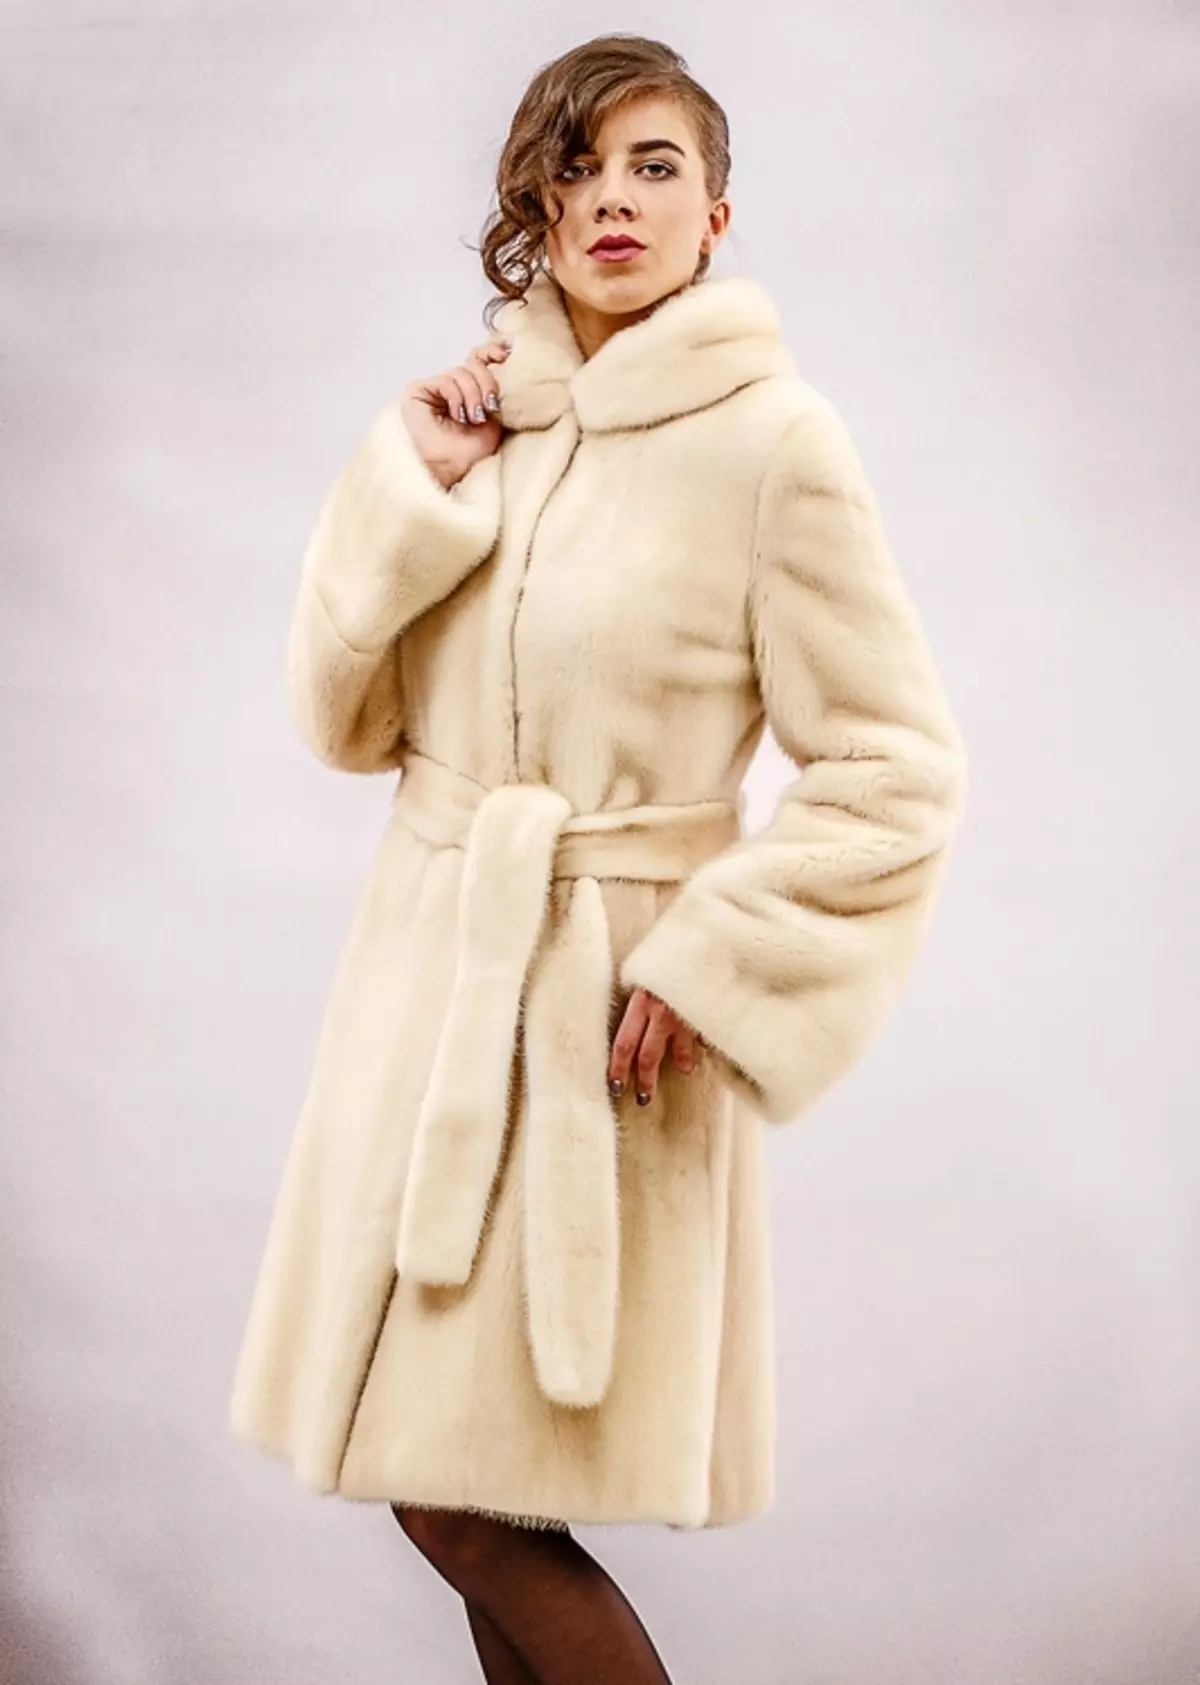 Mermeriny Fur Coats (37 foto): Recensione di modelli eleganti del marchio 325_21